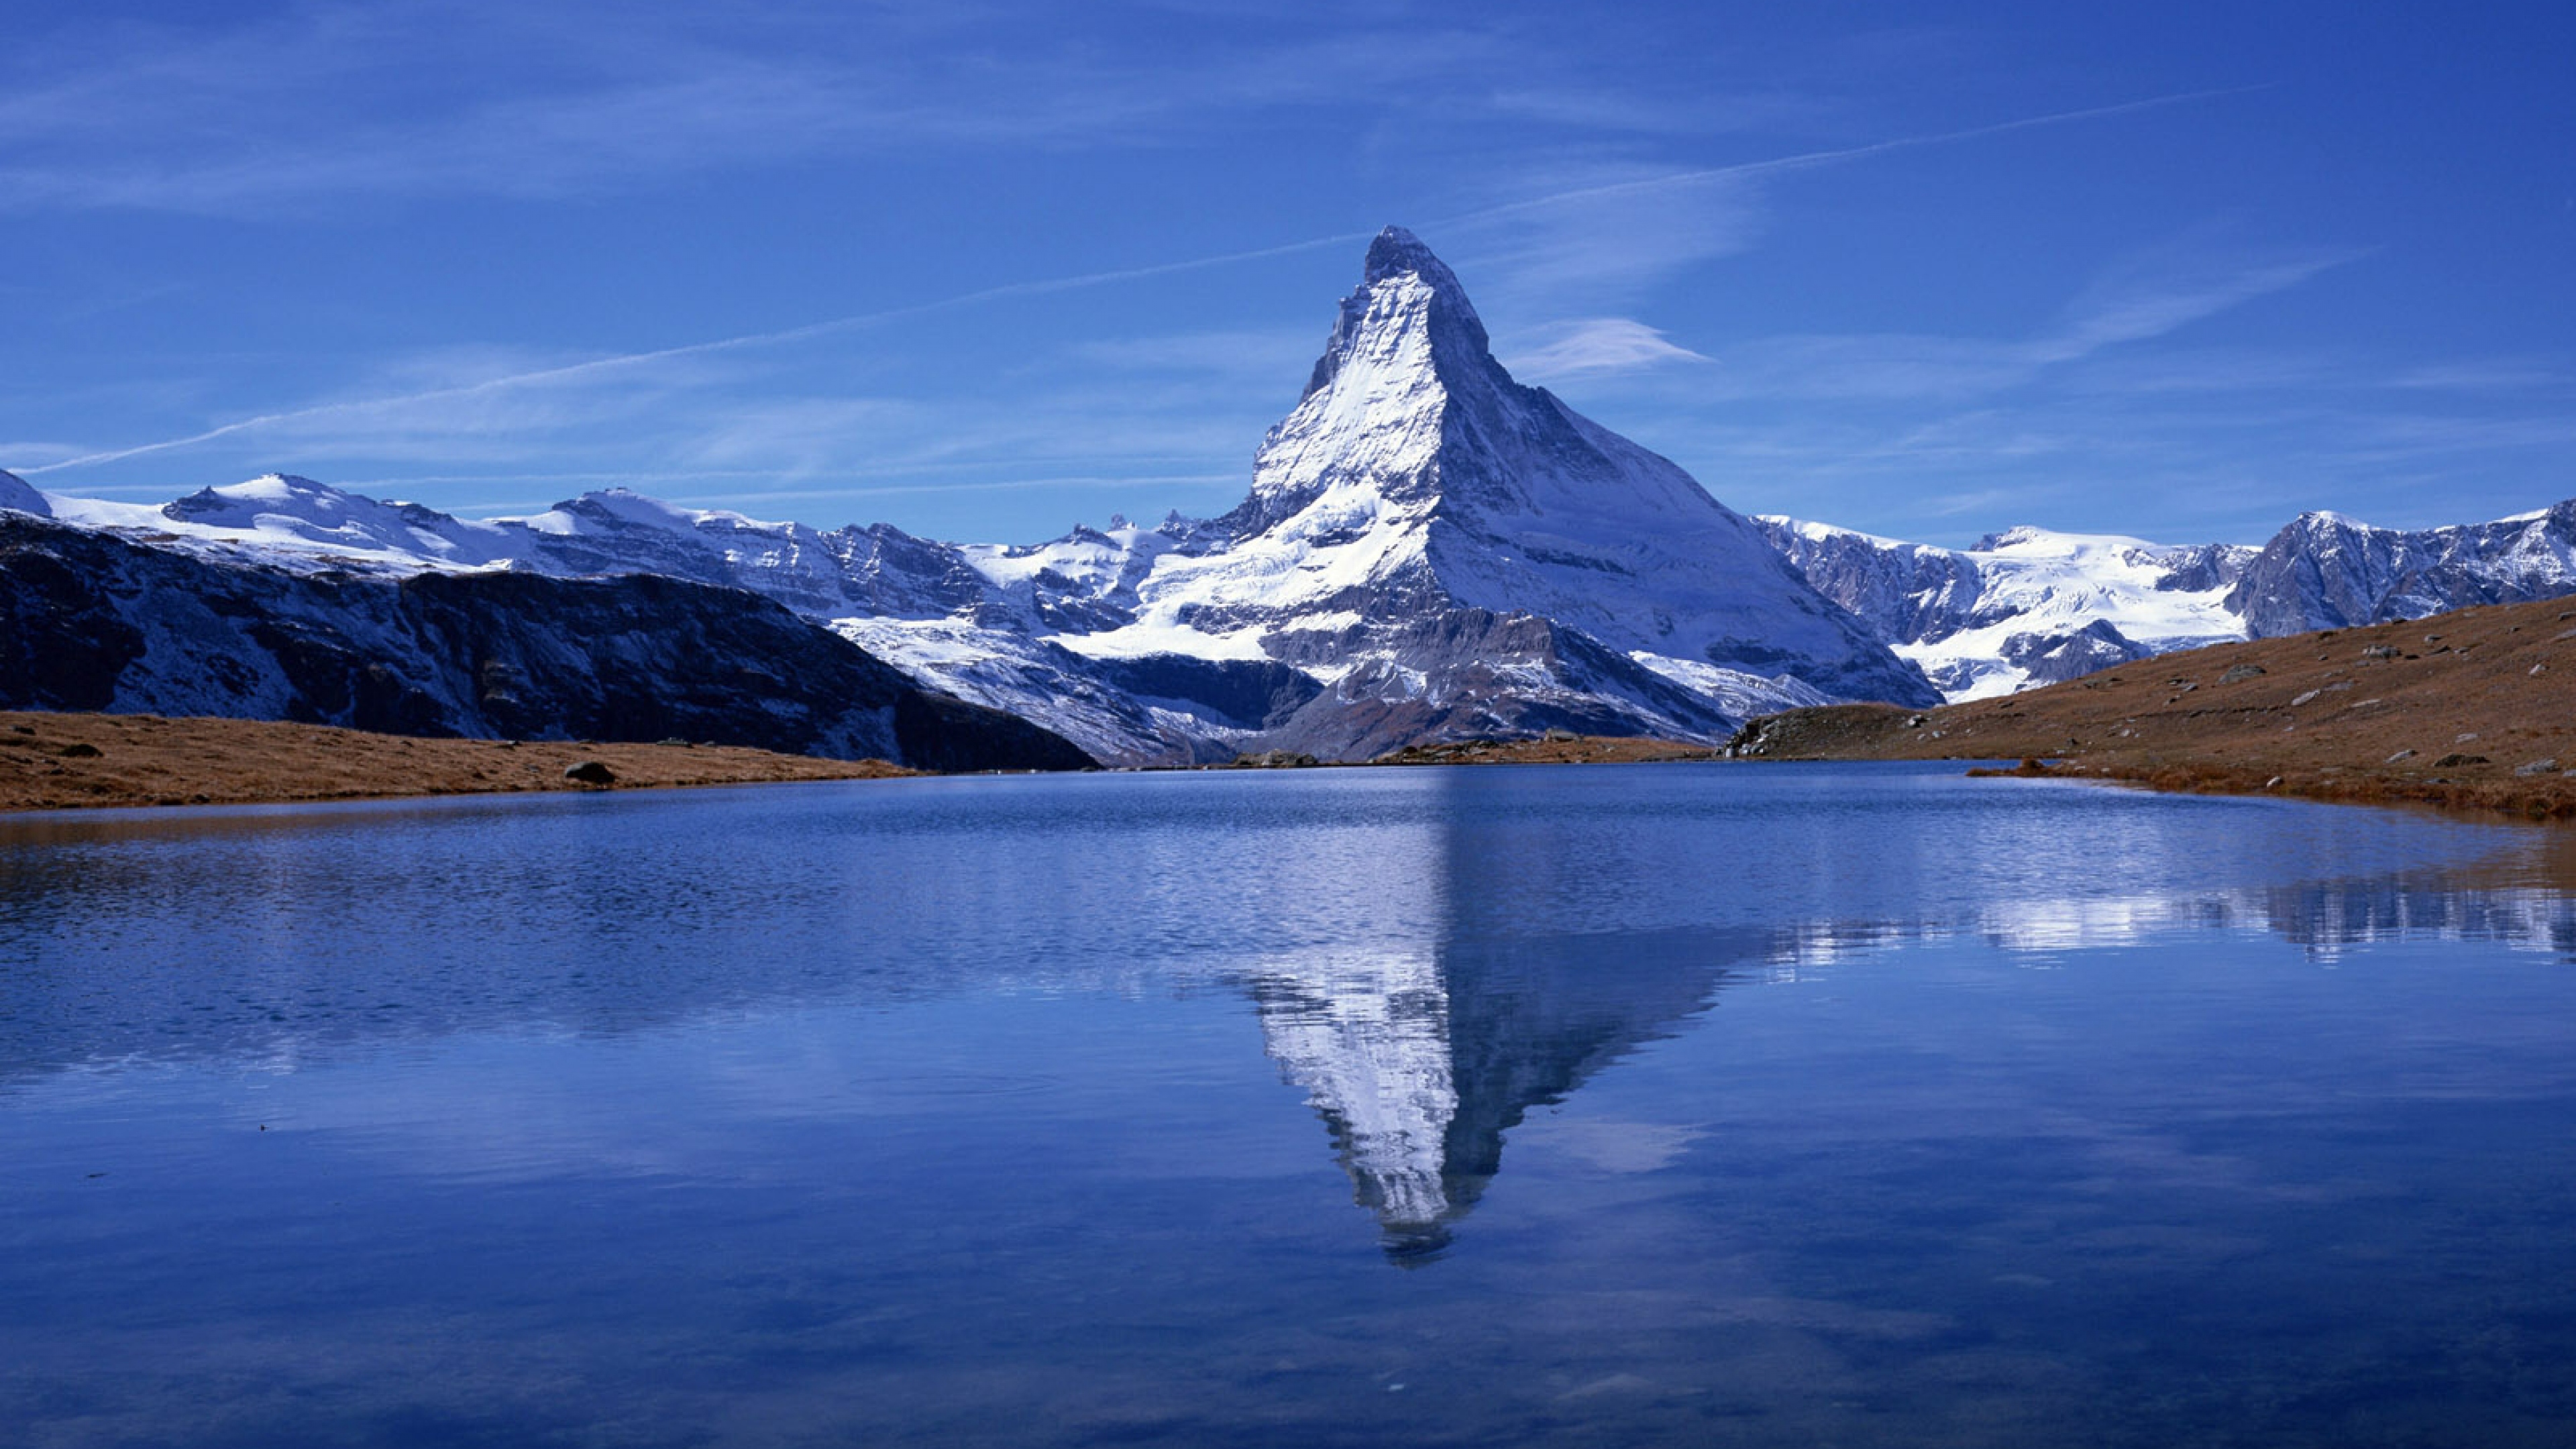 Top Peak Lake Reflection Wallpaper Background 4k Ultra HD